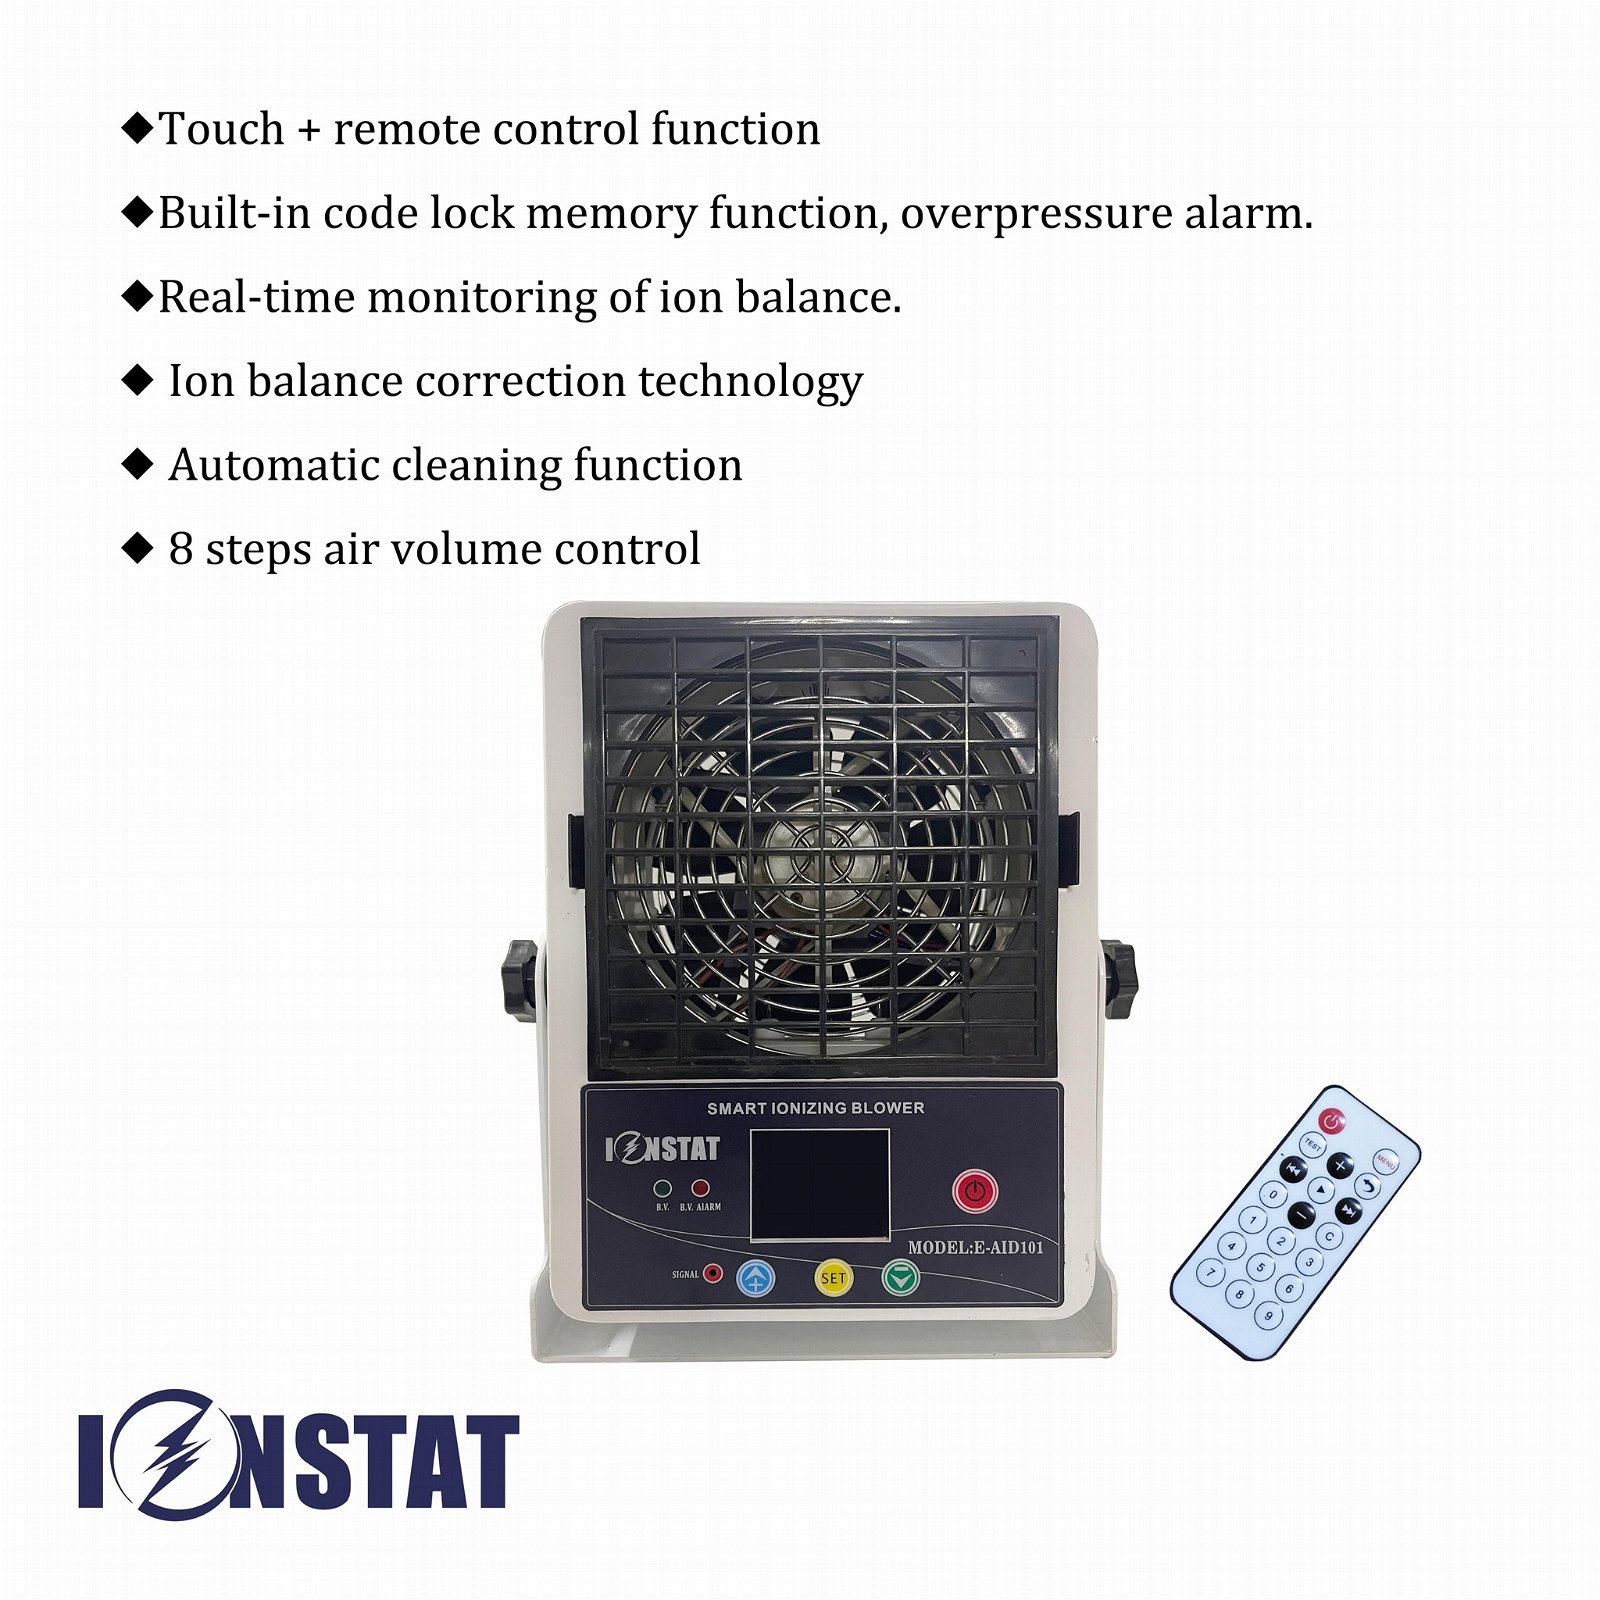 NEW Remote Control smart auto clean ion balance monitor ionizer blower